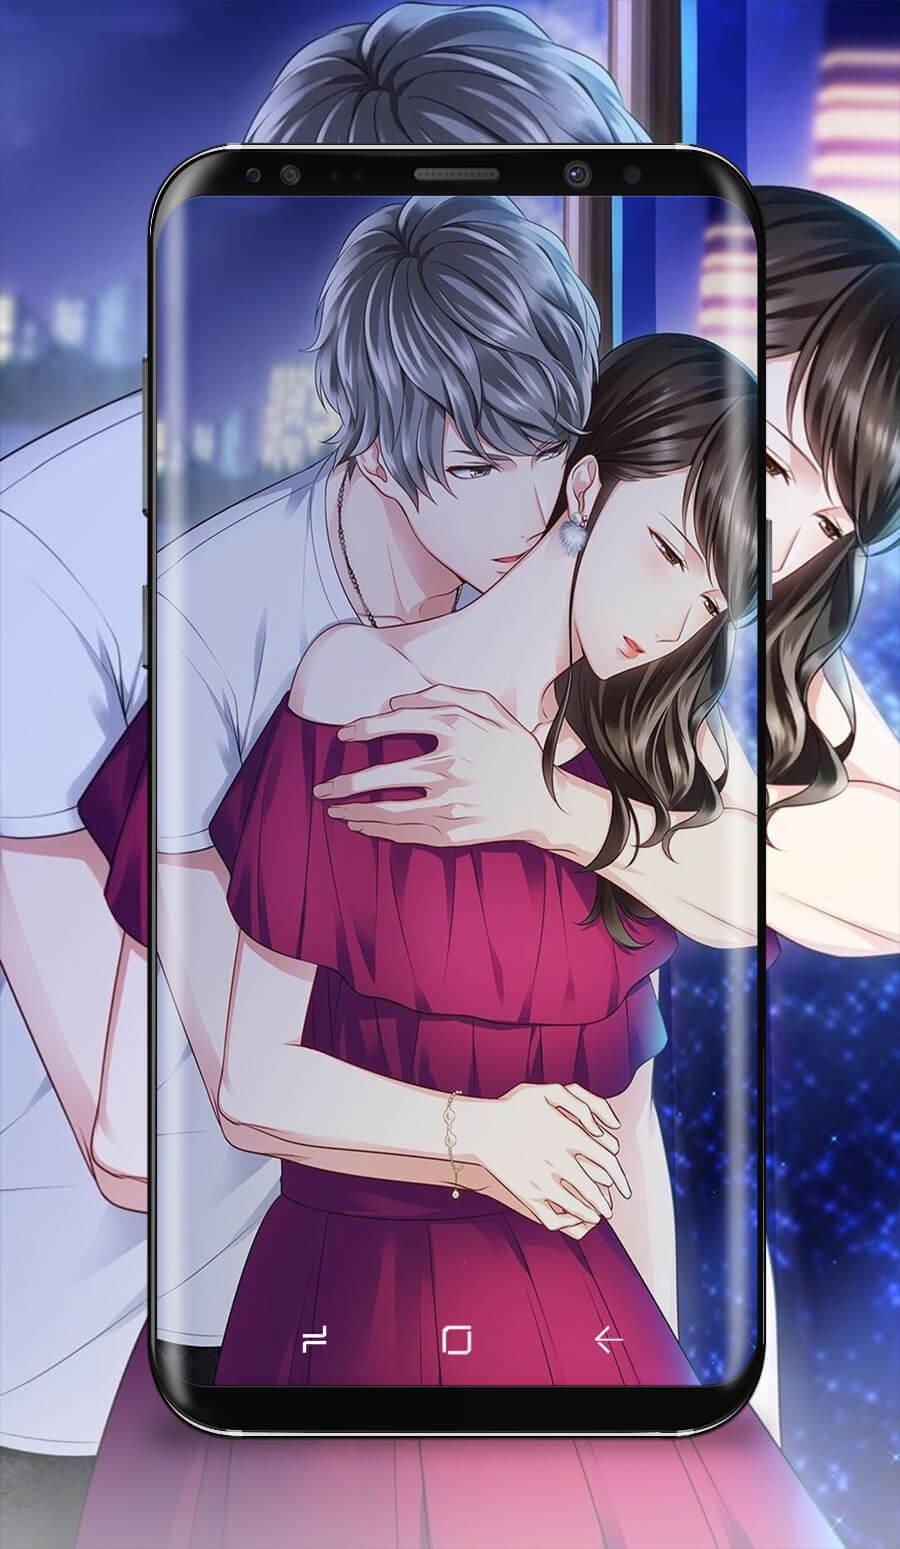  Anime  Couple Kissing  Wallpaper  cho Android  Ti v APK